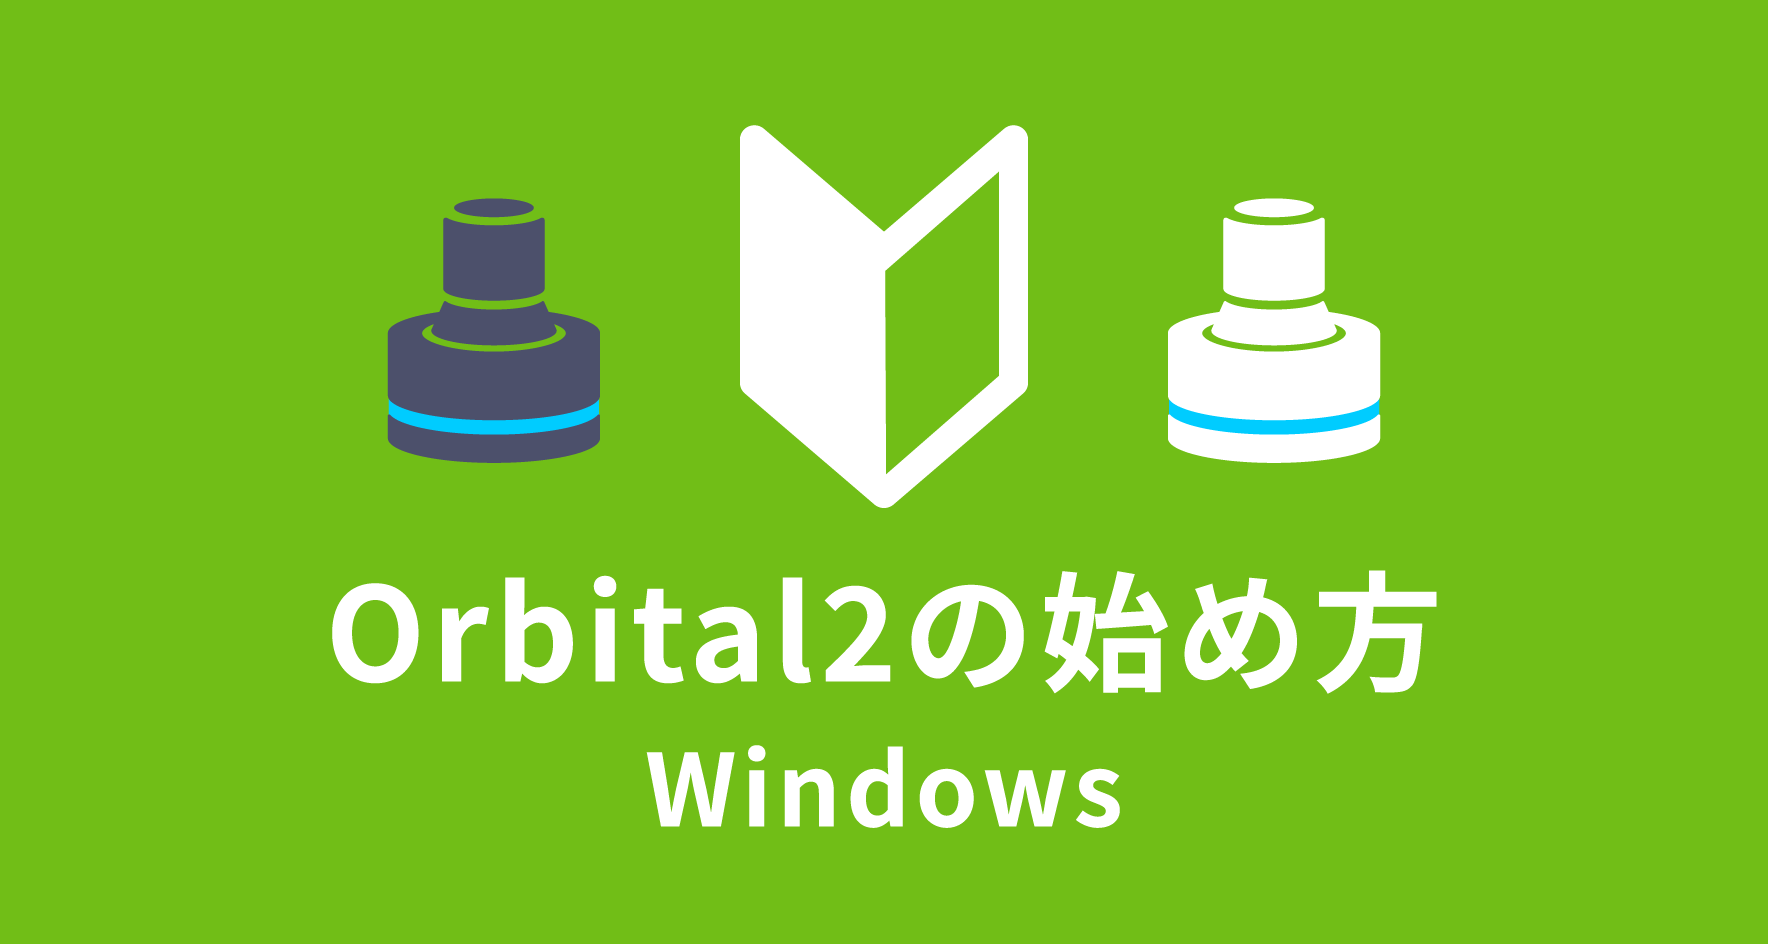 4. Orbital2 導入方法【Windows版】